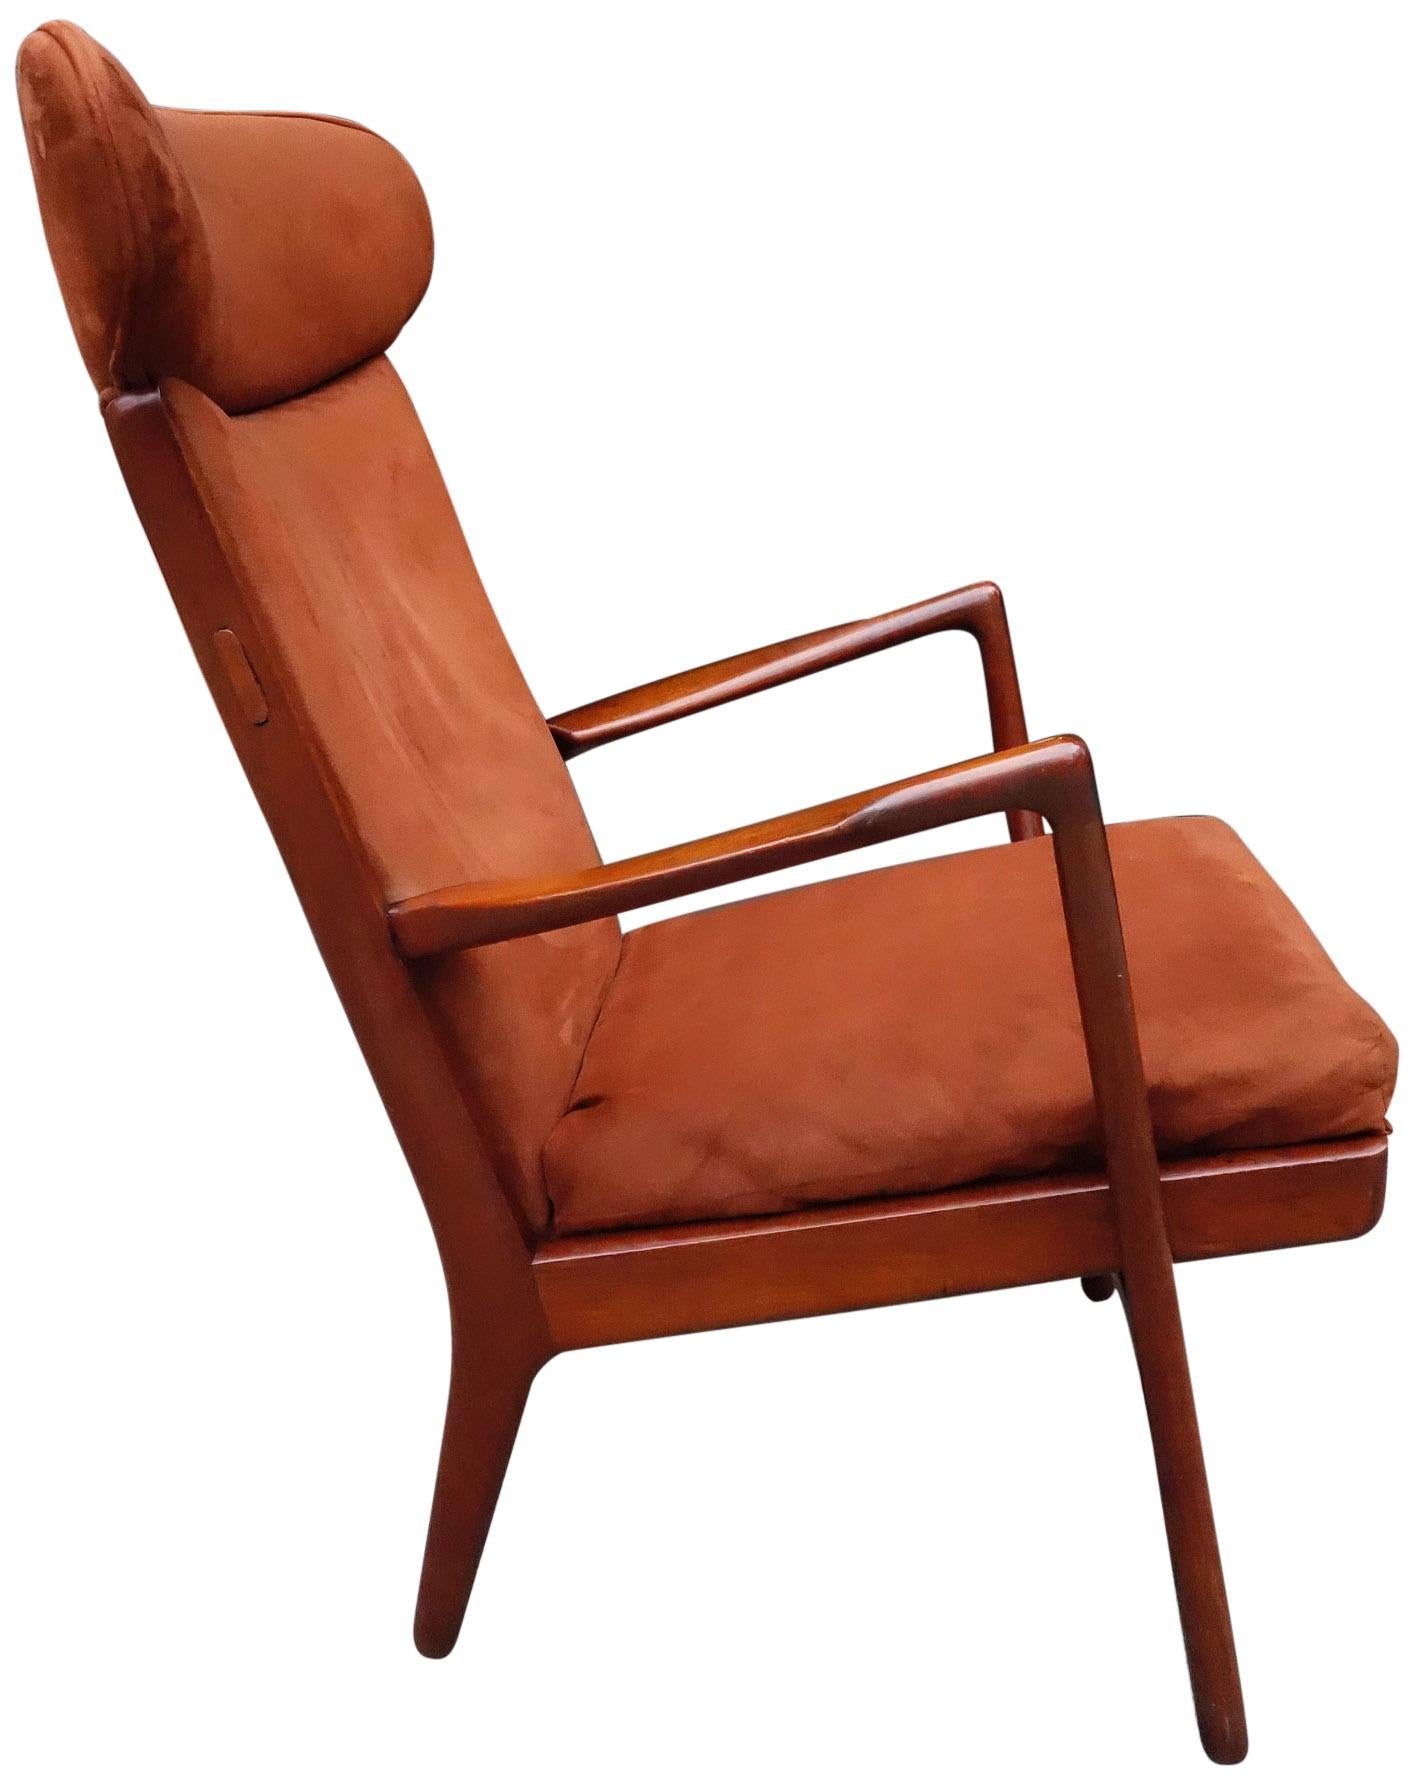 20th Century Superb Midcentury Hans Wegner Lounge Chair For Sale